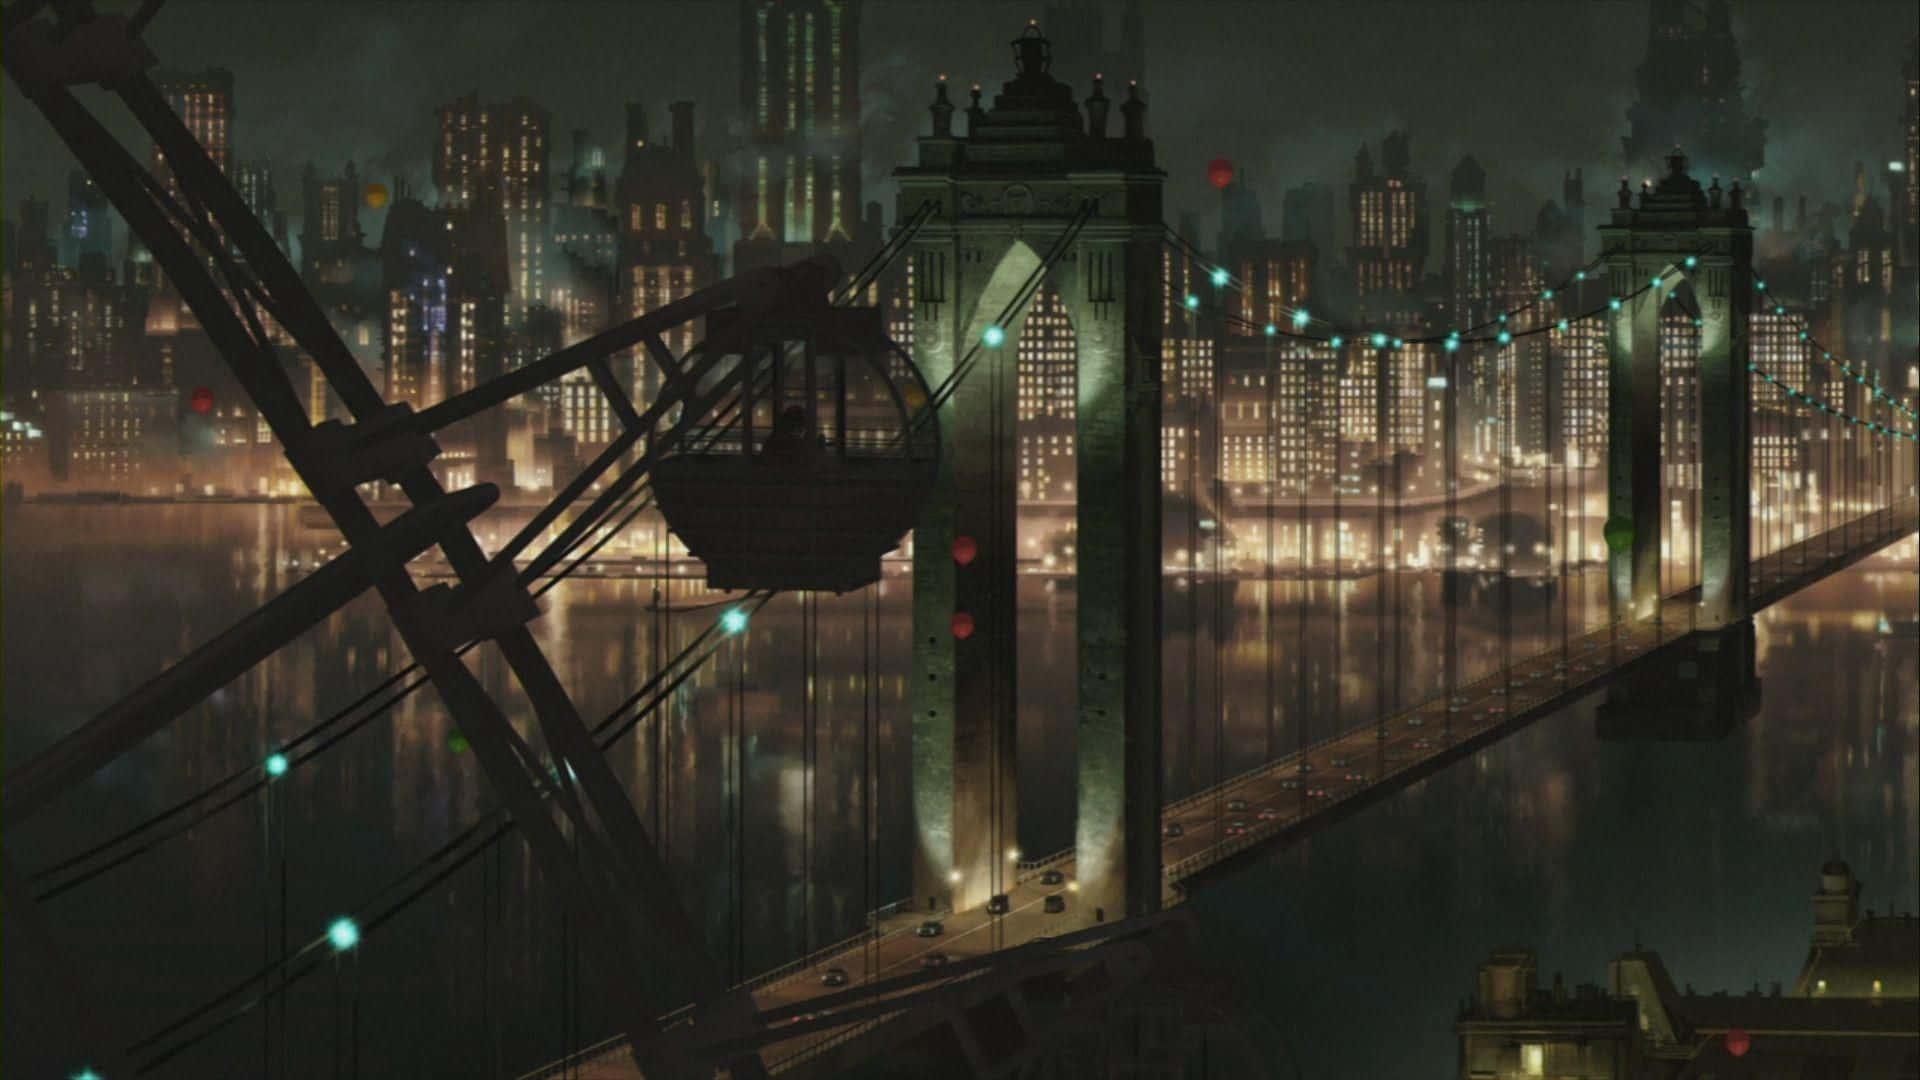 Mysterious Gotham City Skyline at Night